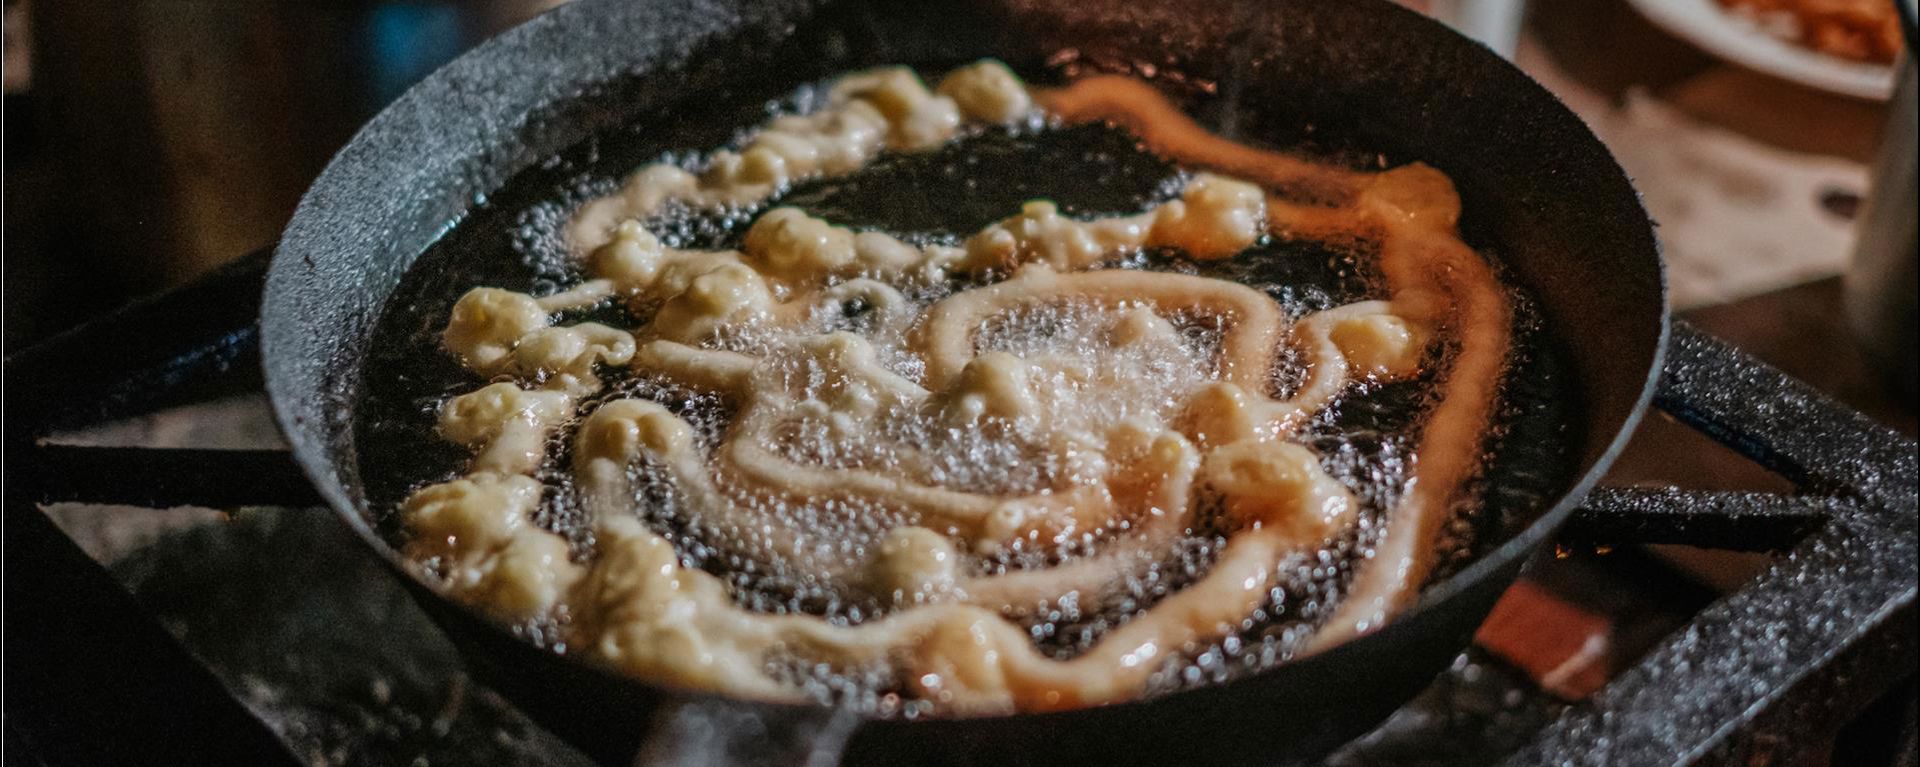 Strauben are fried in hot oil